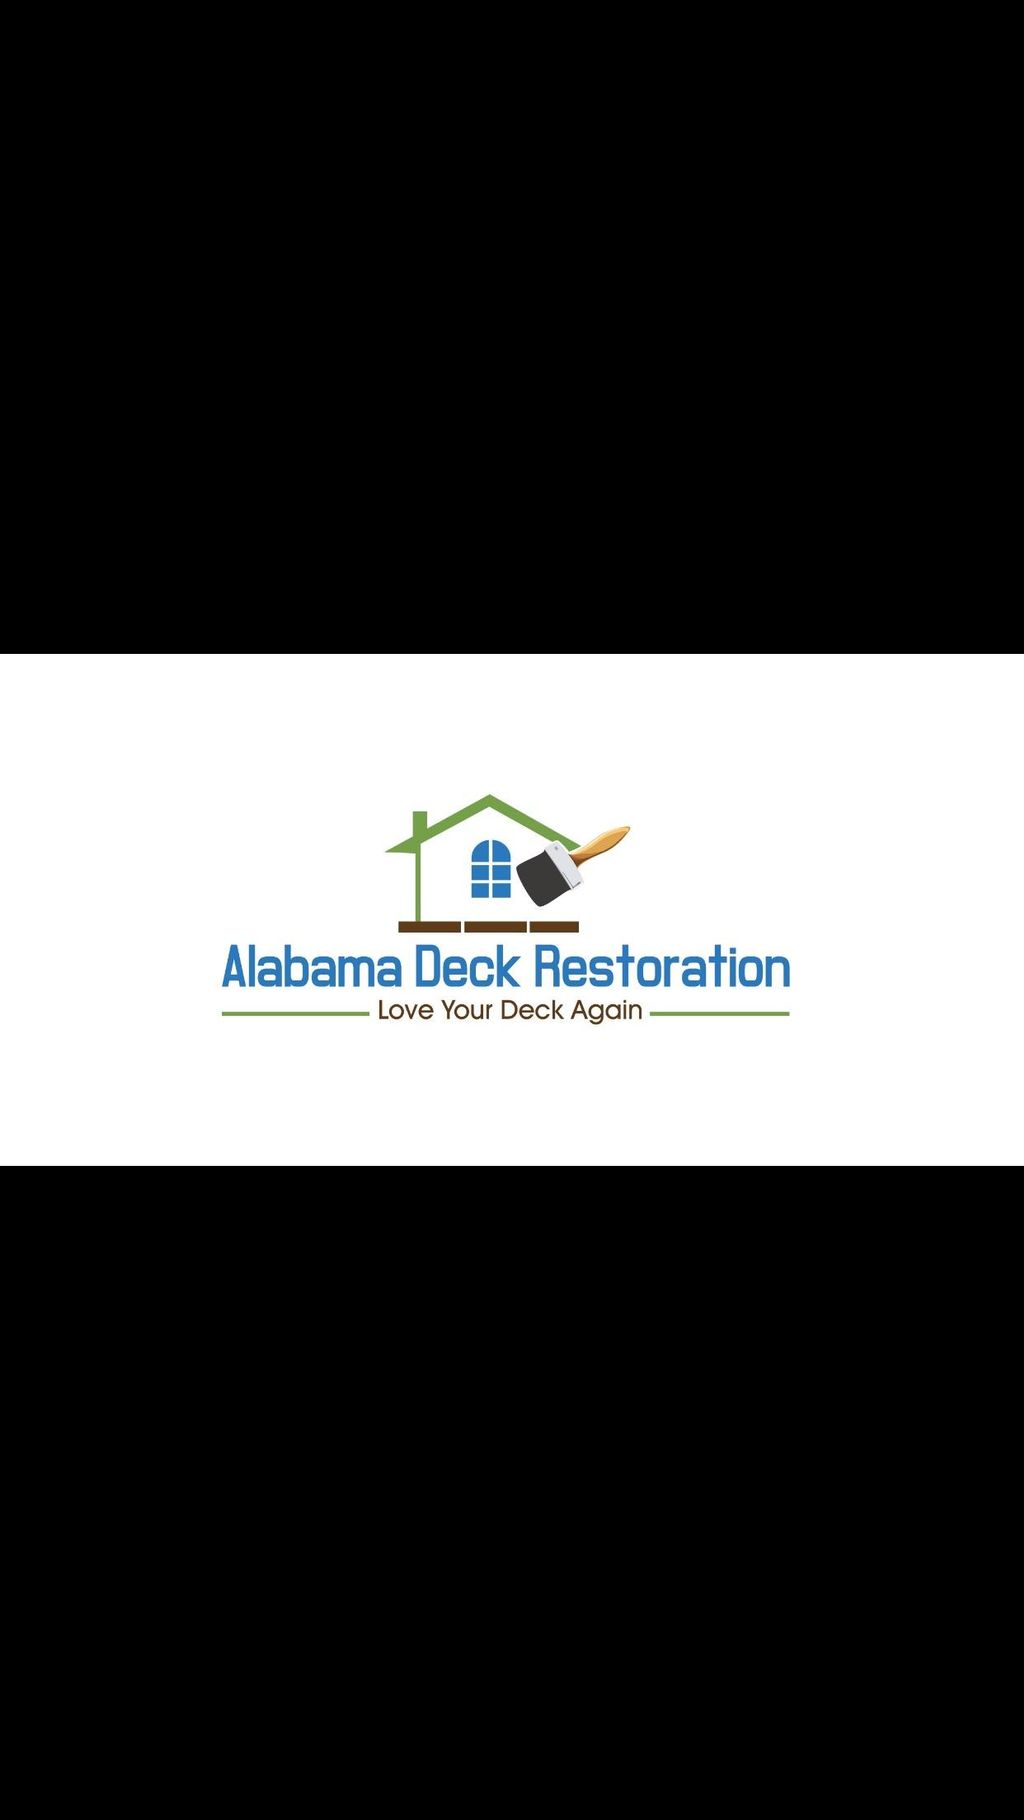 Alabama Deck Restoration